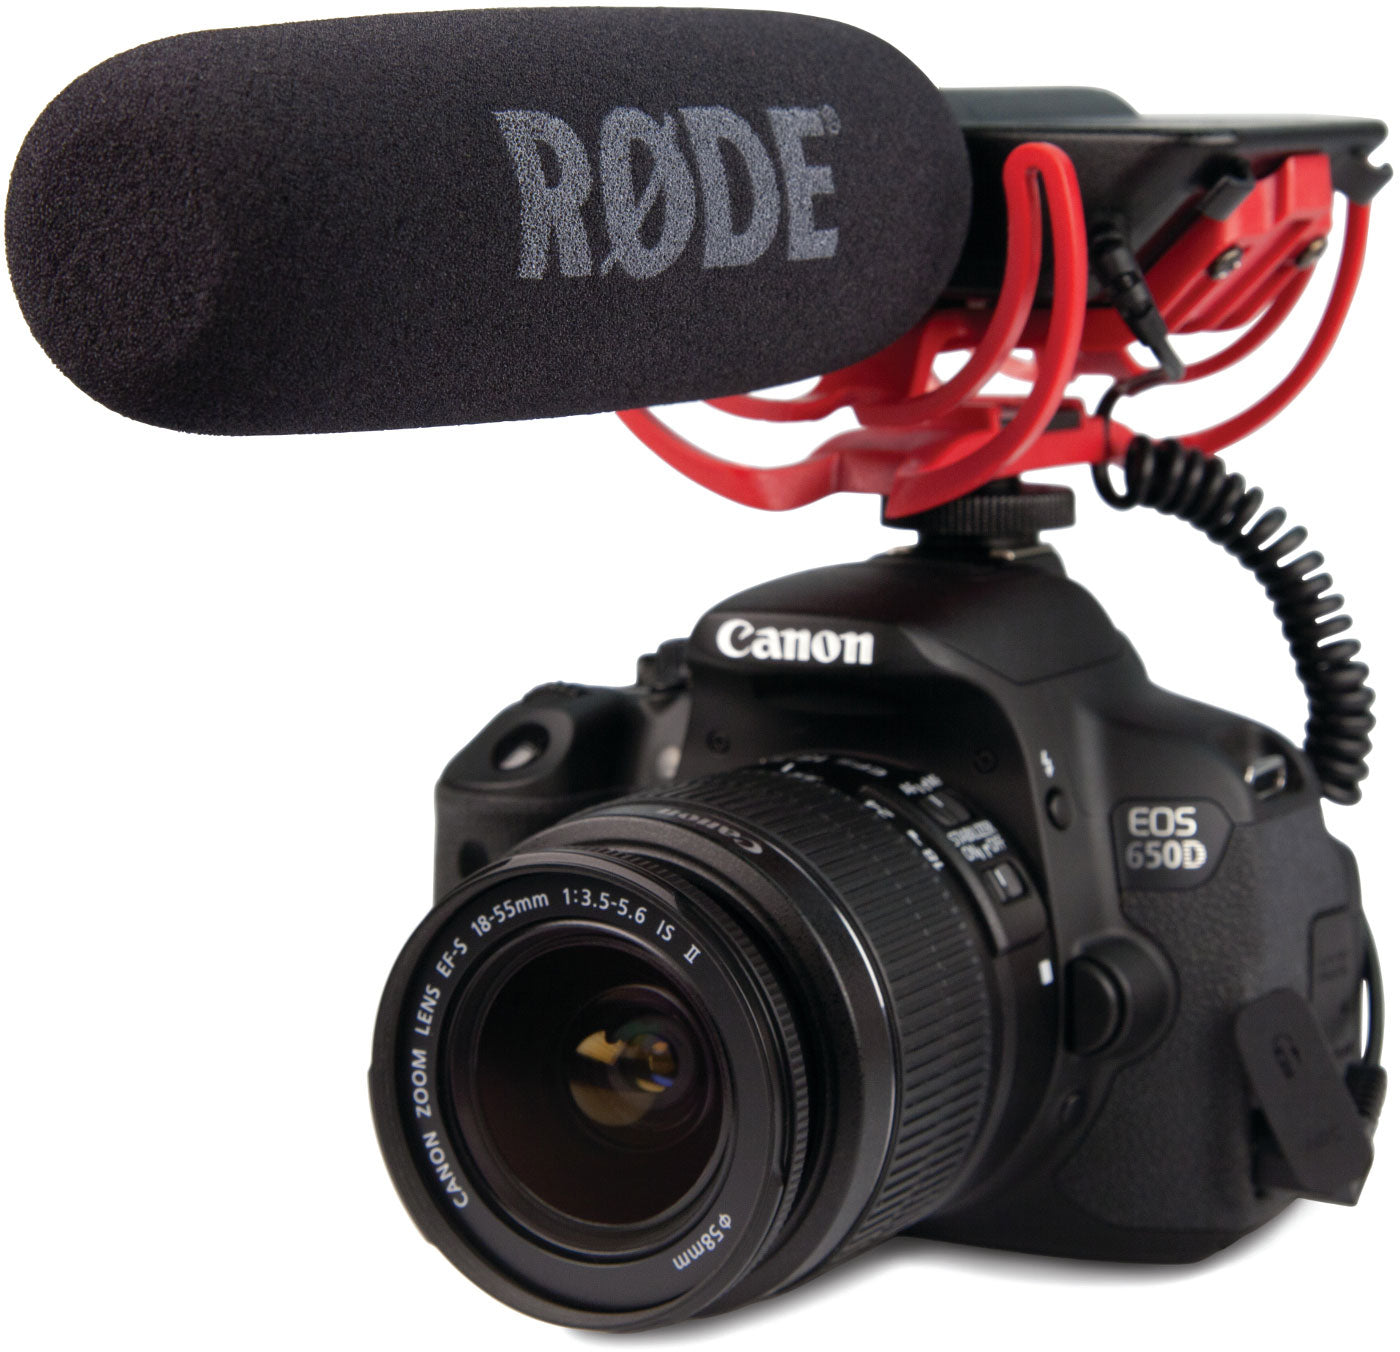 RODE VideoMic GO On-Camera Microphone